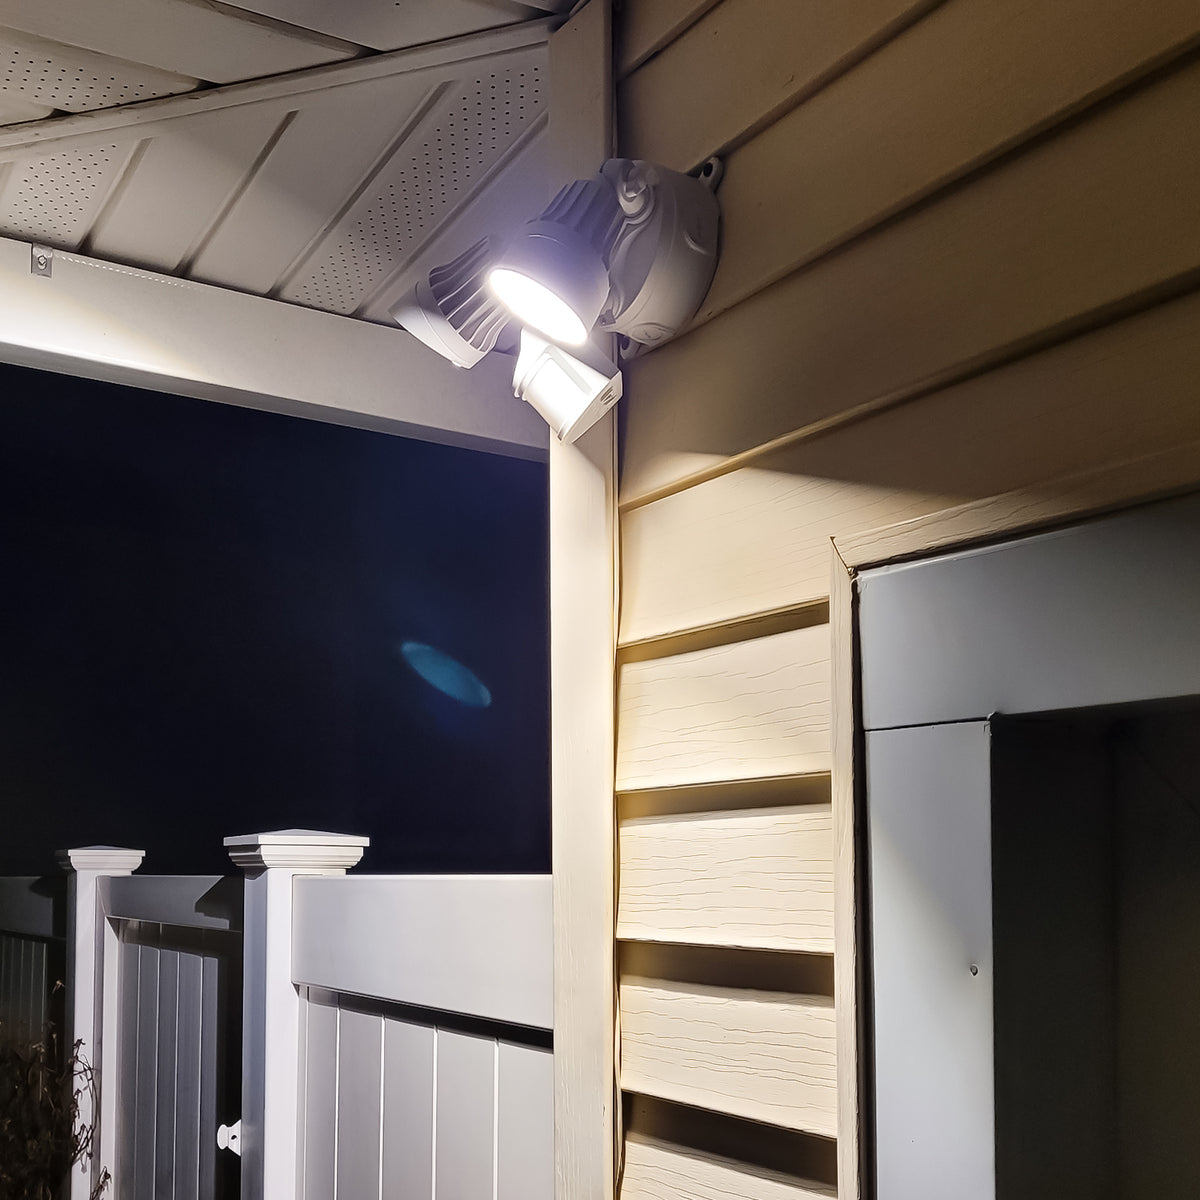 LED Outdoor Security Lights, Motion Sensor Flood Light, 20W 2000 Lumens, IP65 Waterproof, 5000K Daylight White, ETL Listed